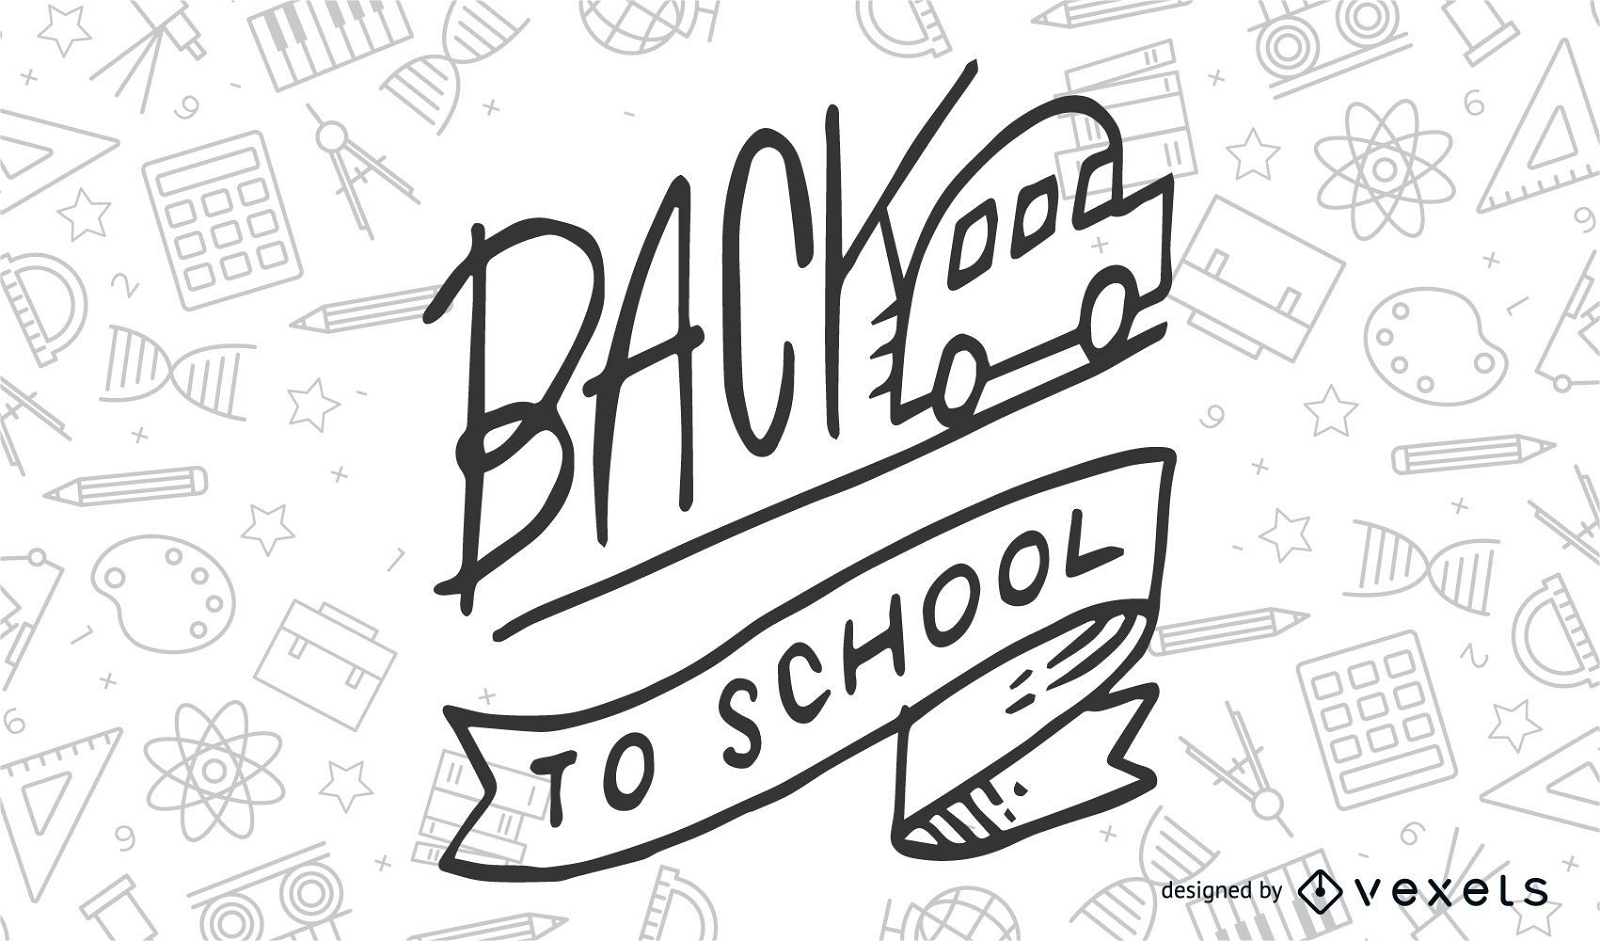 Back so school sketch illustration